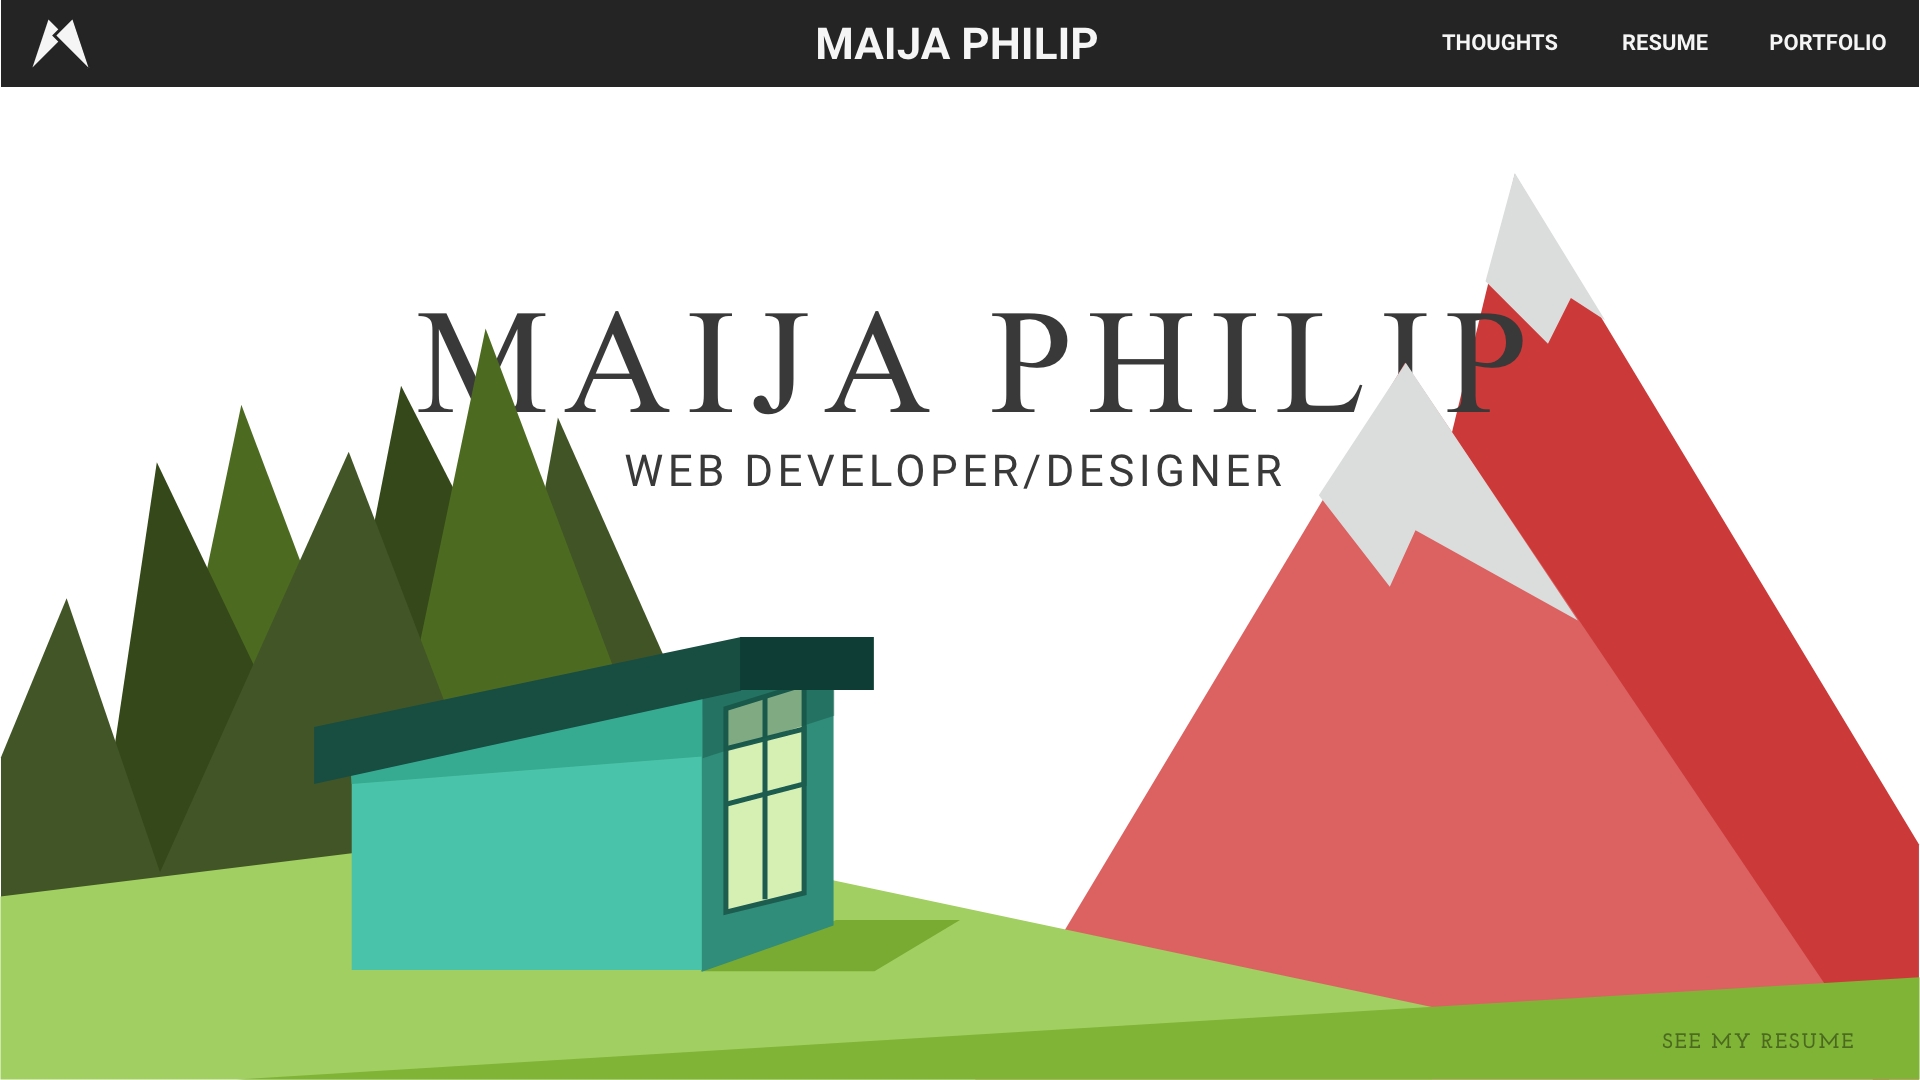 Maija Philip website design with text integrated into flat image design